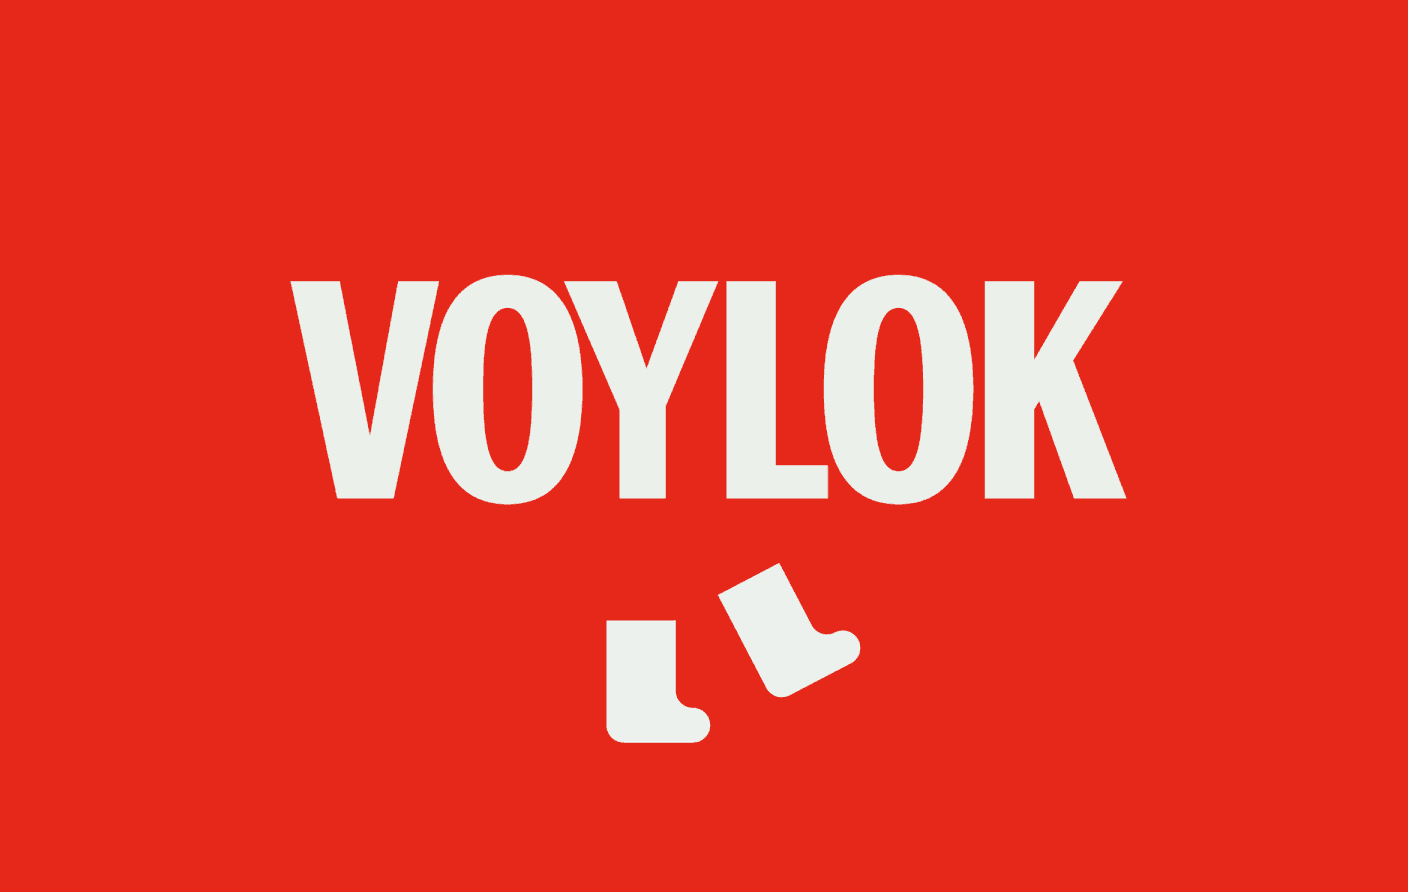 Voylok 鞋品牌